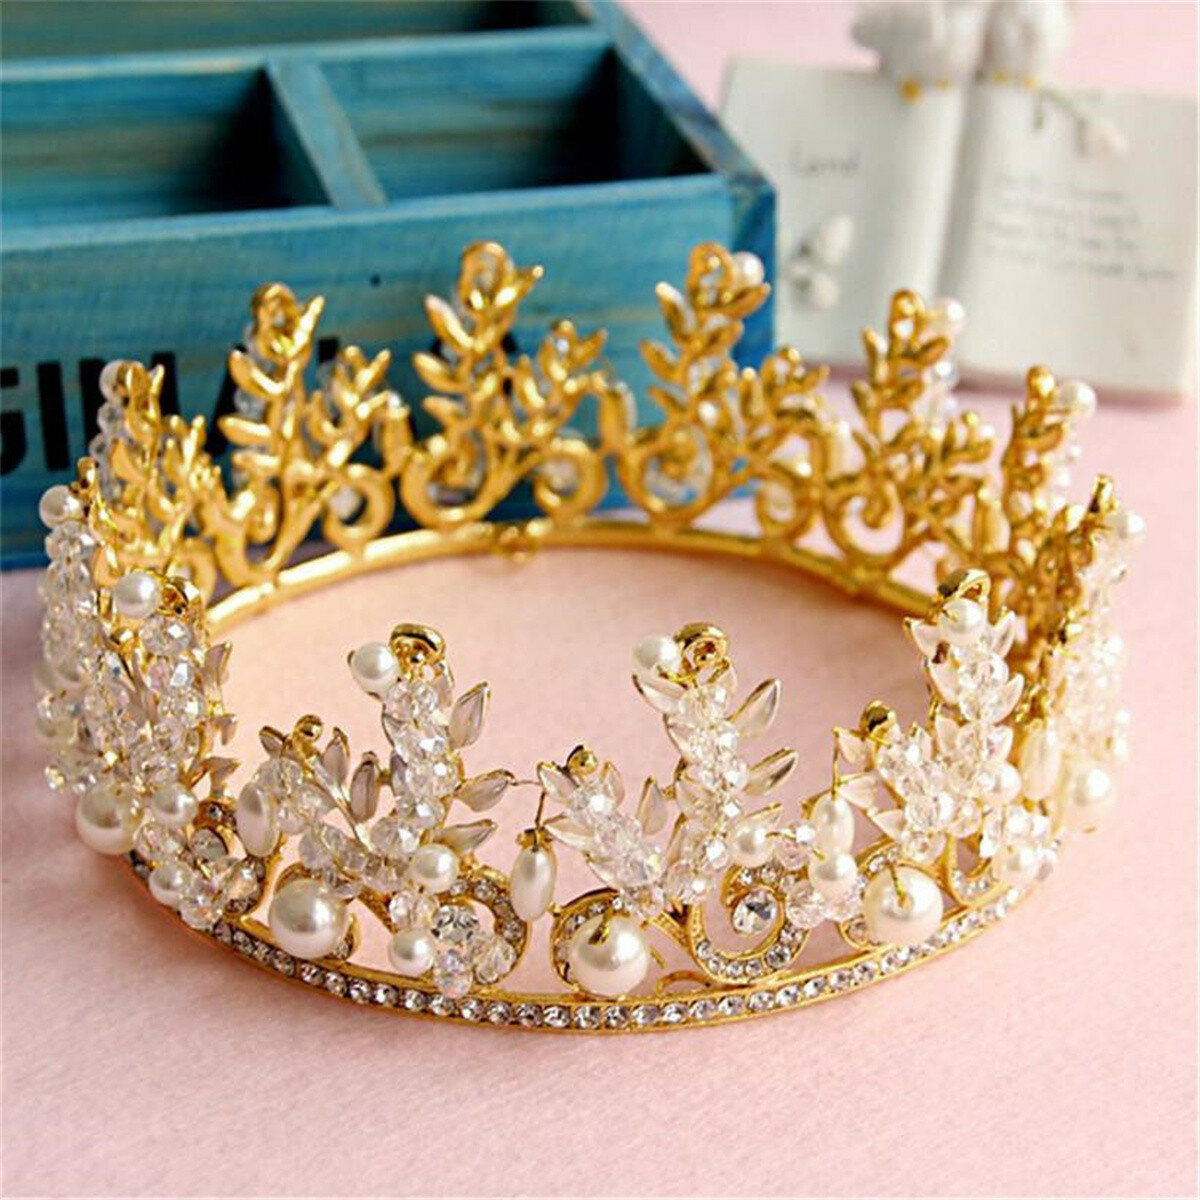 

Bride Rhinestone Crystal Pearl Crown Tiara Headband Jewelry Queen Headpiece Wedding Accessories, Silver